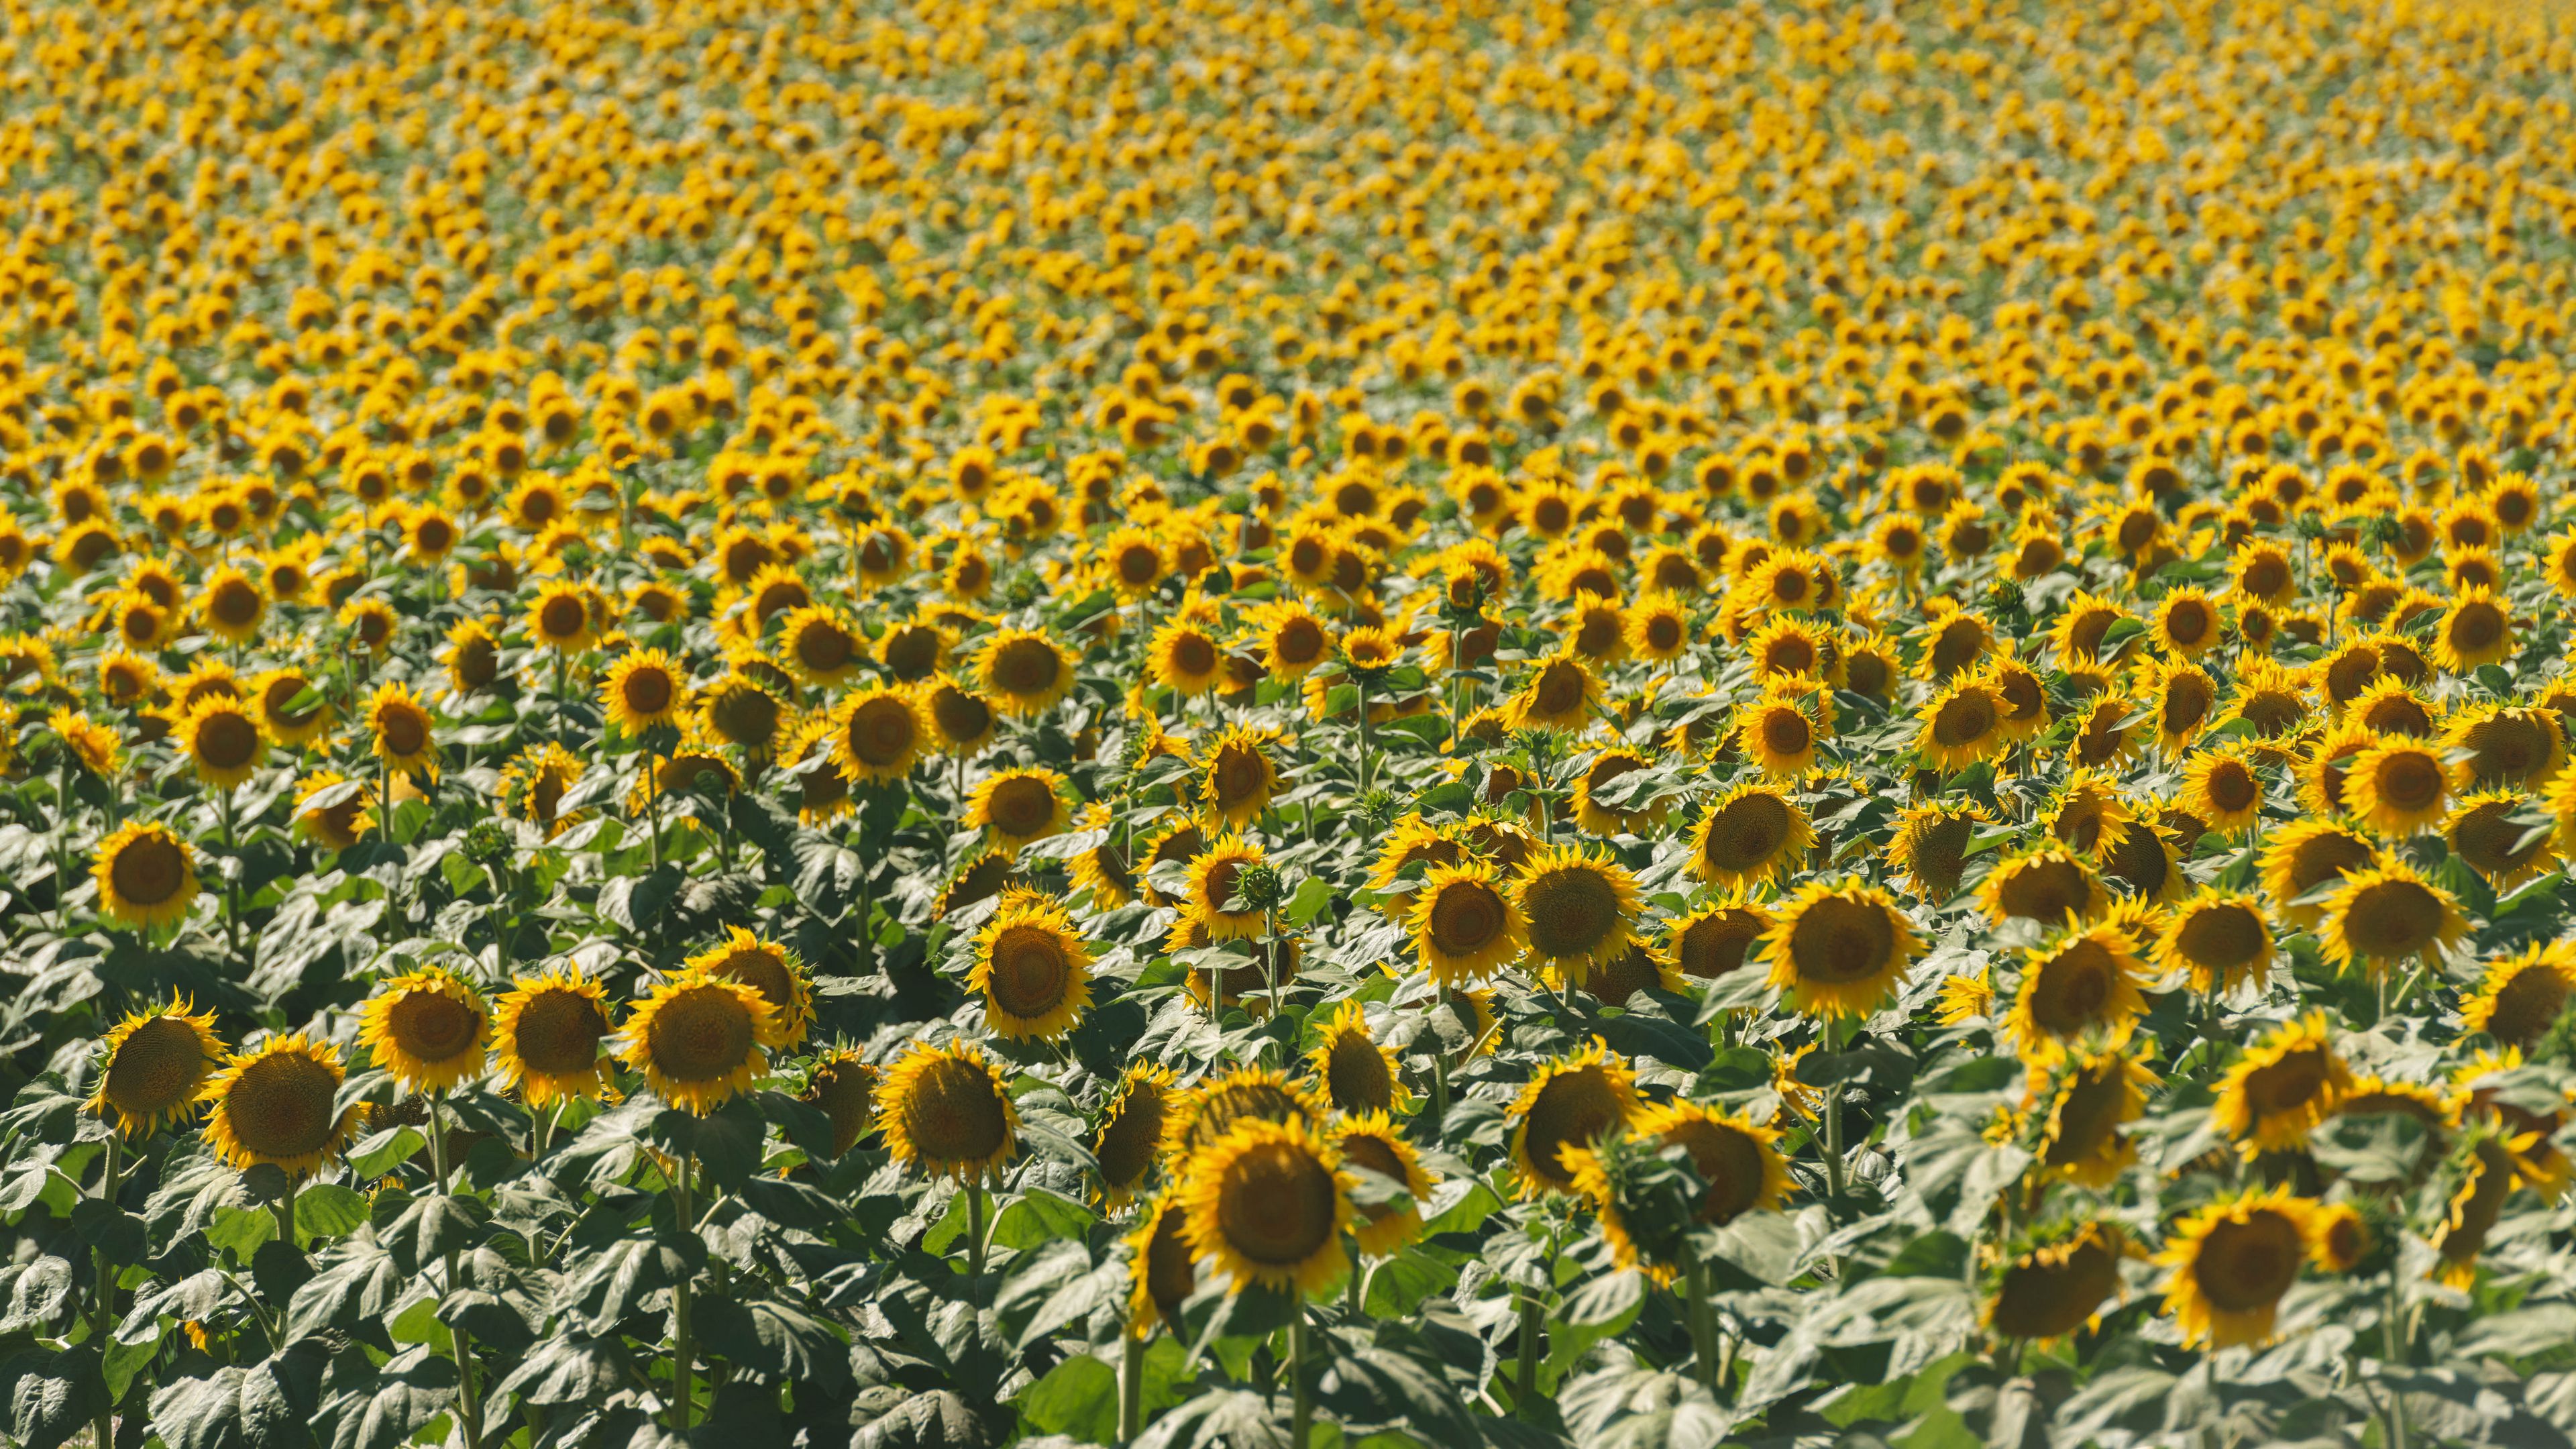 Download wallpaper 3840x2160 sunflowers, field, nature 4k uhd 16:9 hd ...